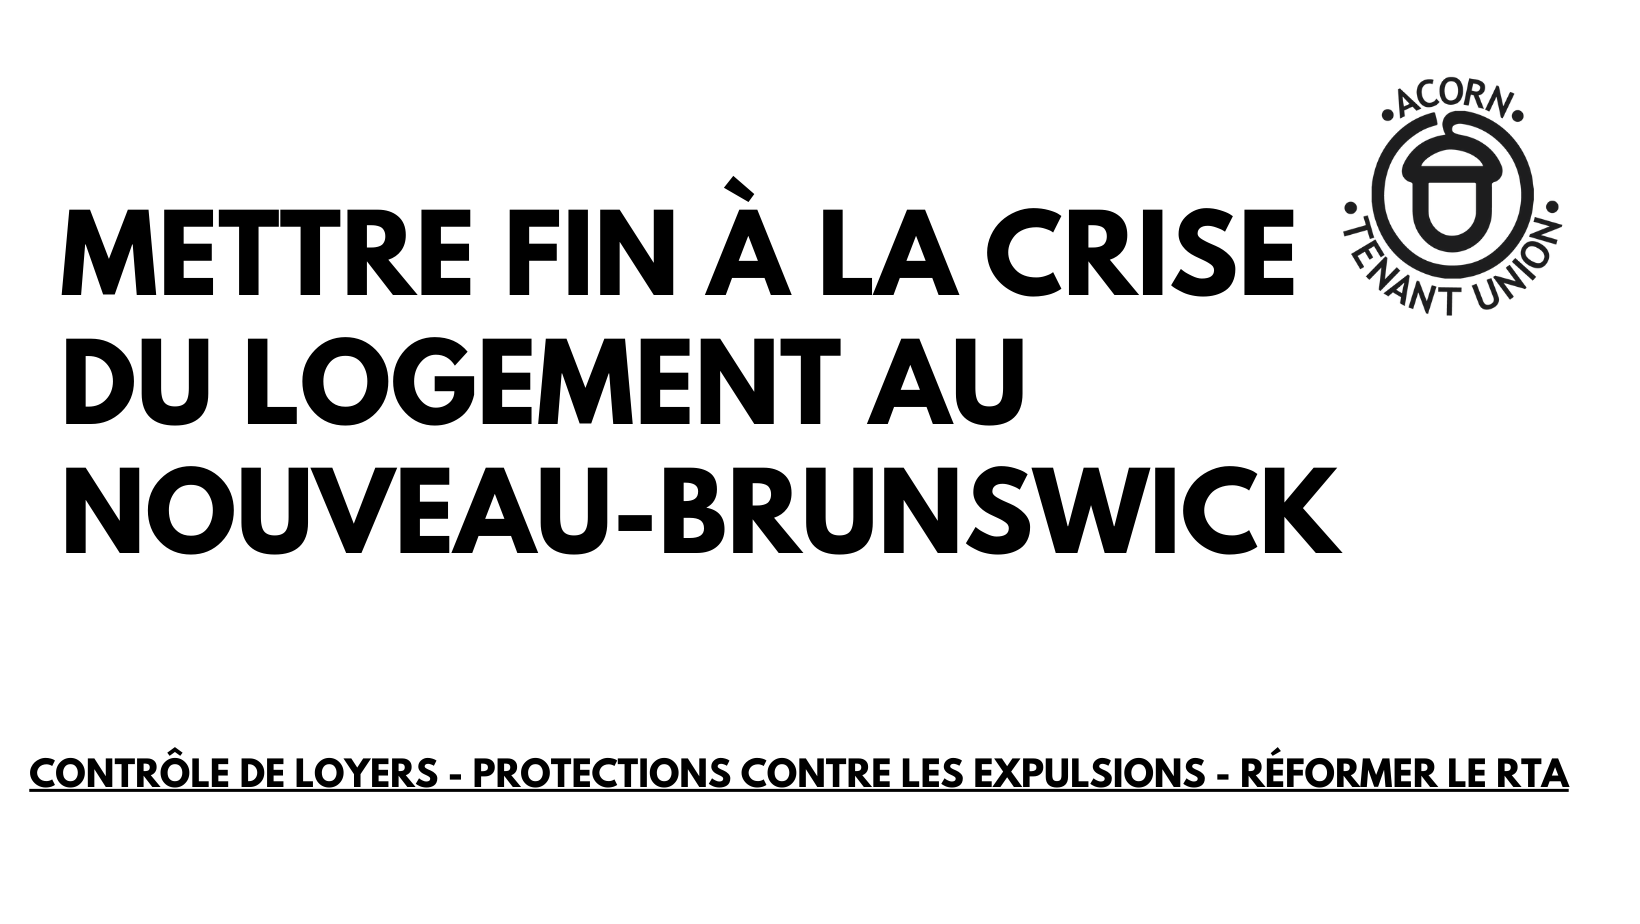 NB housing crisis - French